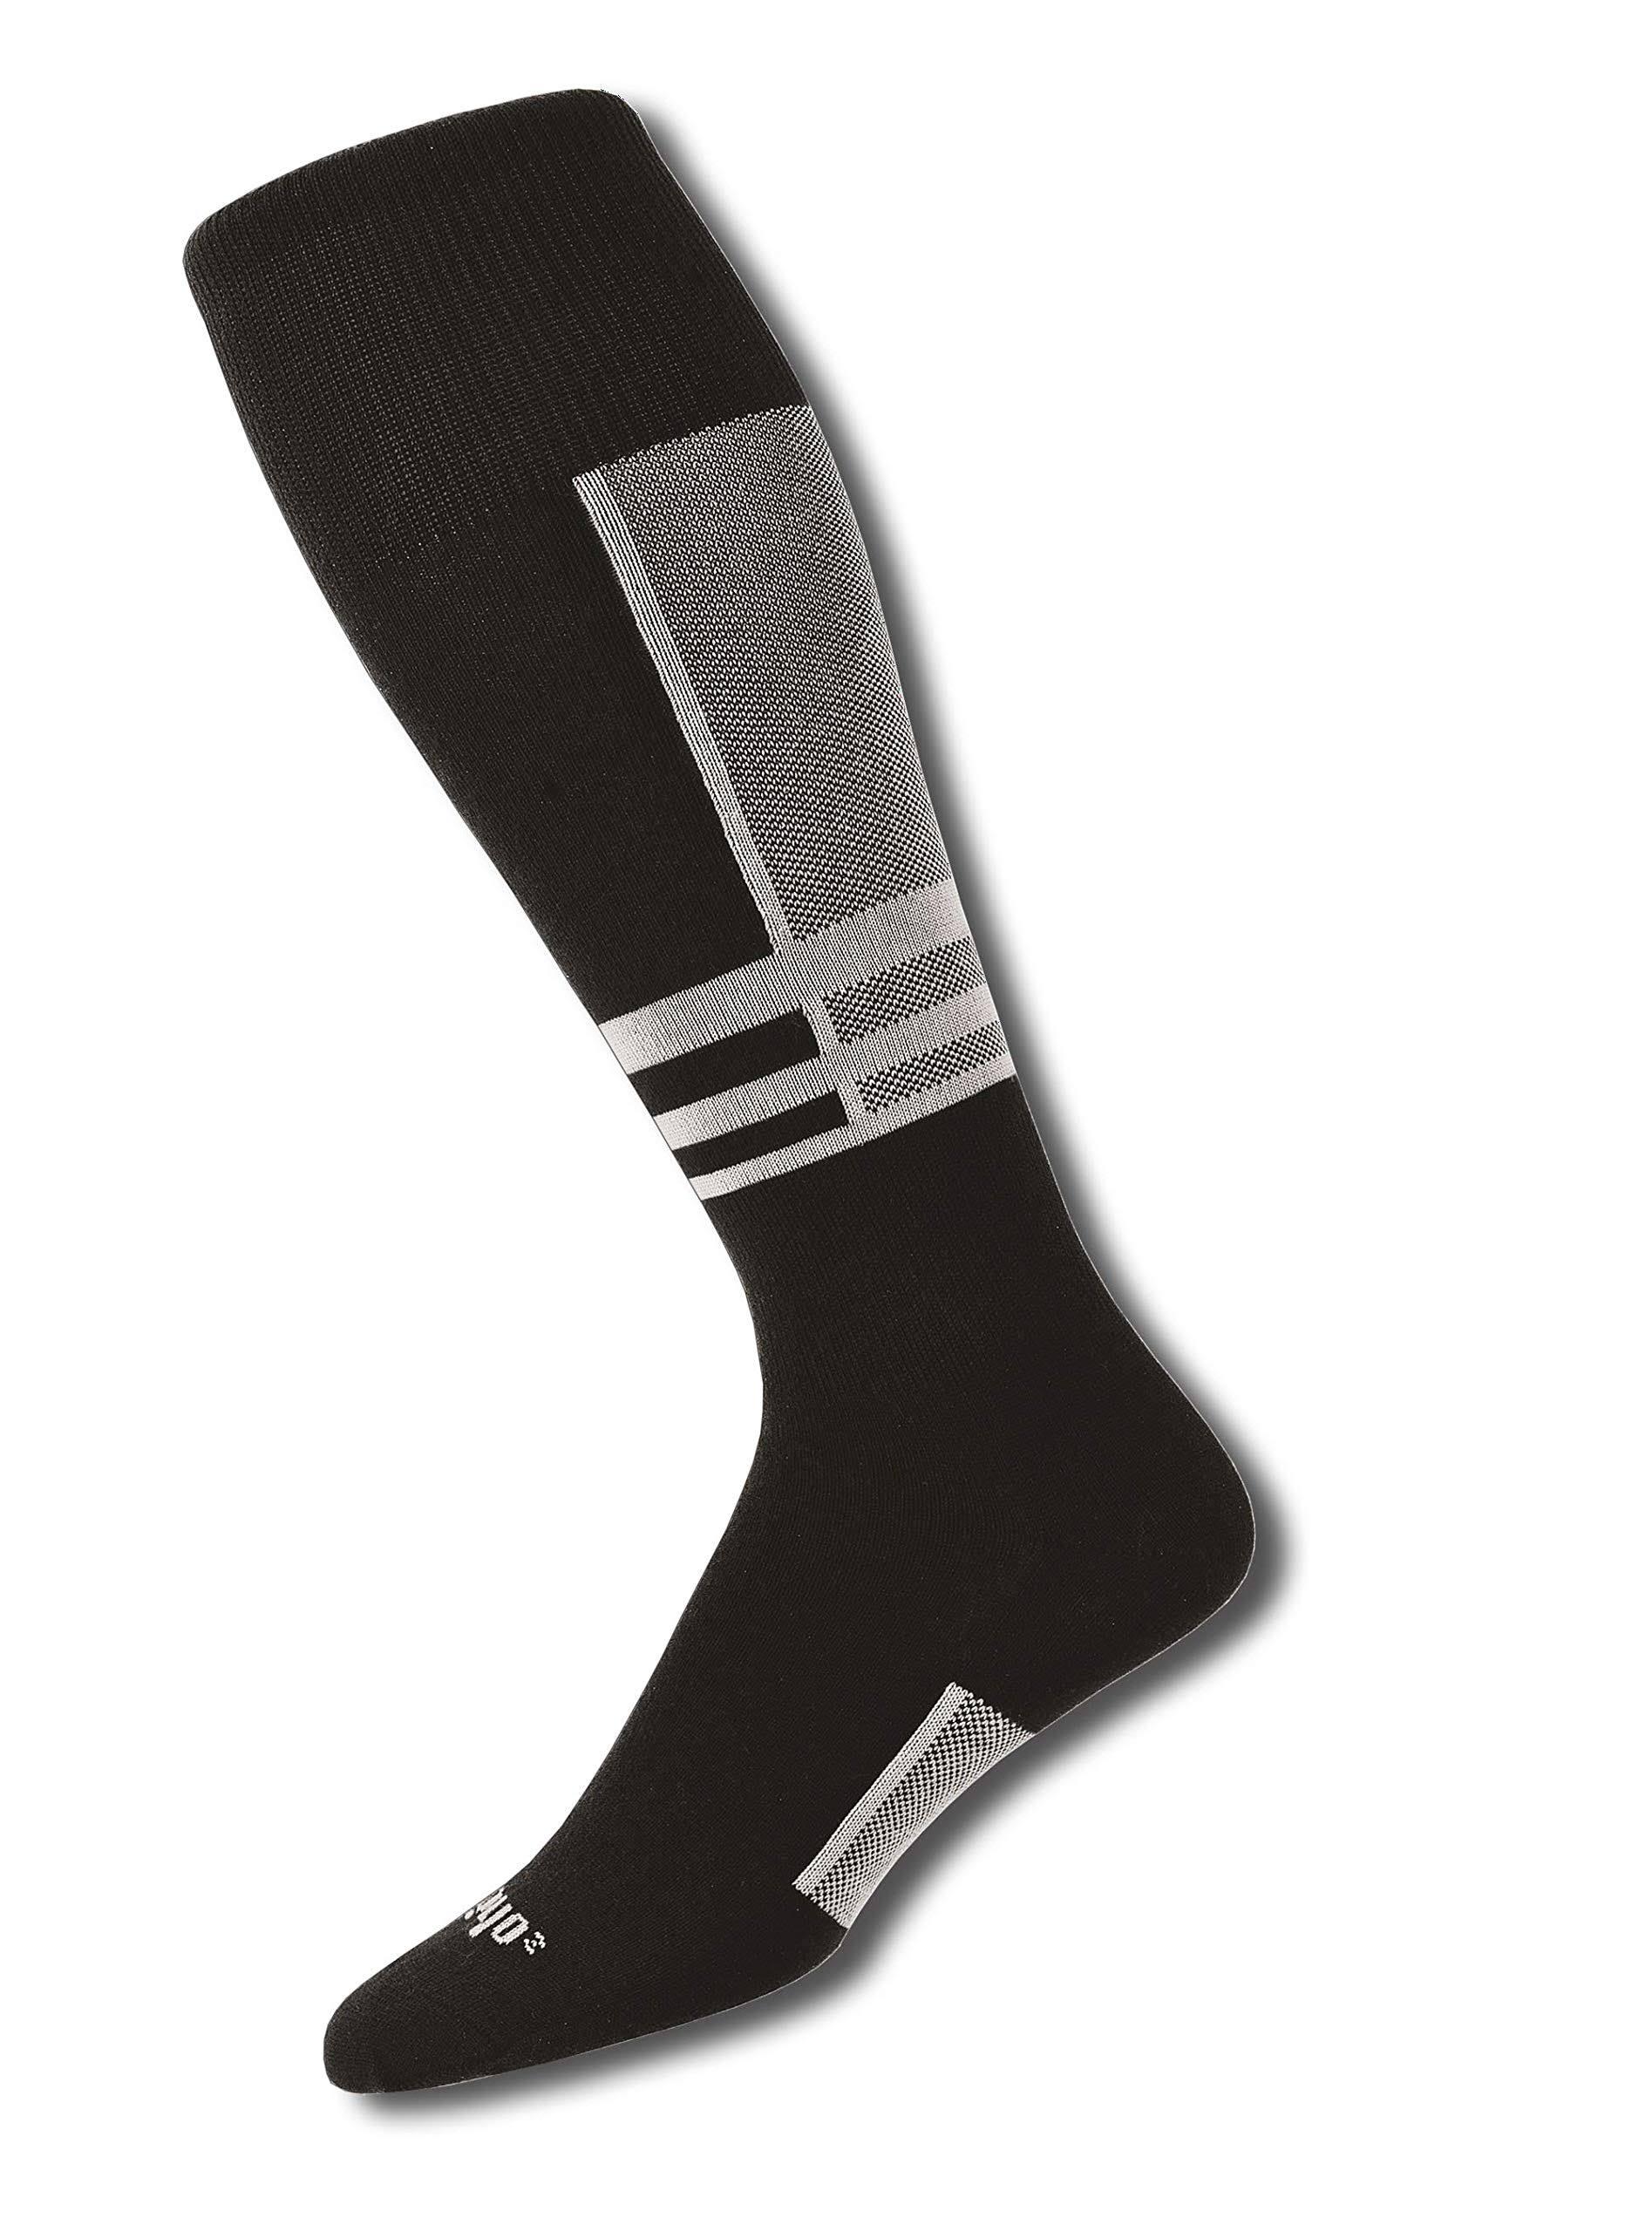 Thorlos Ultra Thin Custom Ski Socks - Black/Powder White, Medium